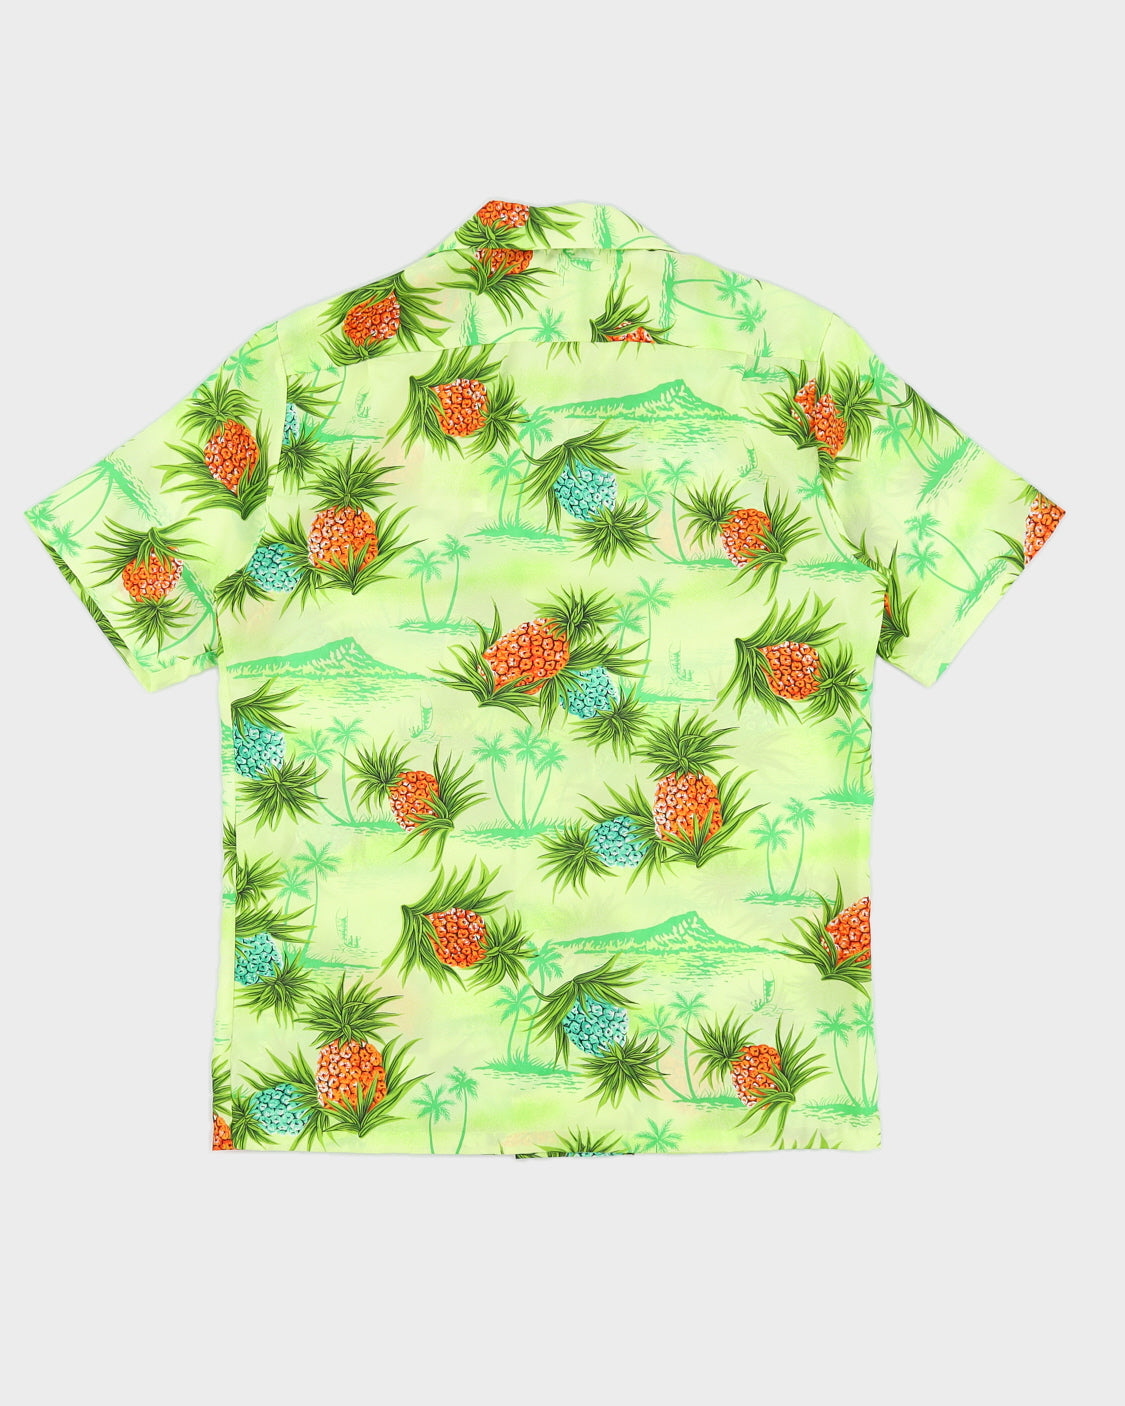 Vintage 70s Pomare Hawaiian Pineapple Shirt - M